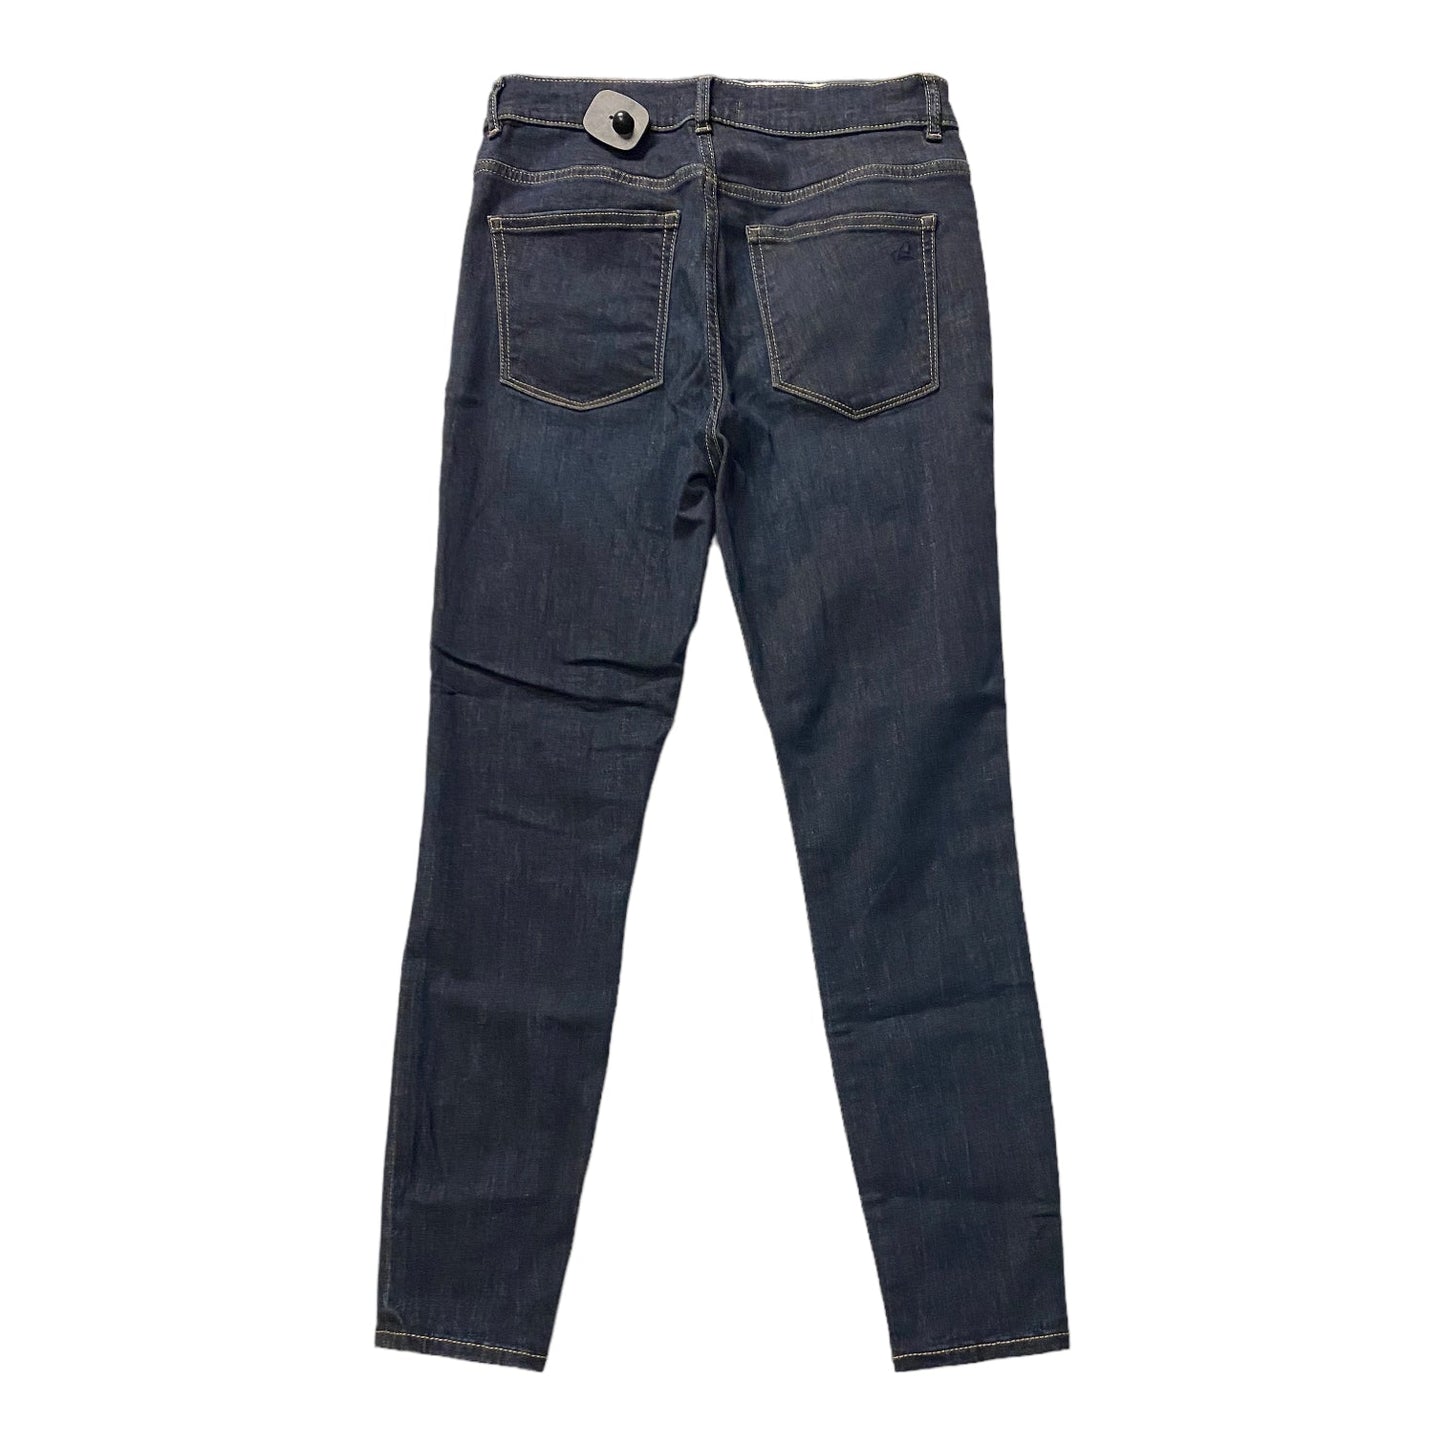 Blue Denim Jeans Straight Dl1961, Size 8